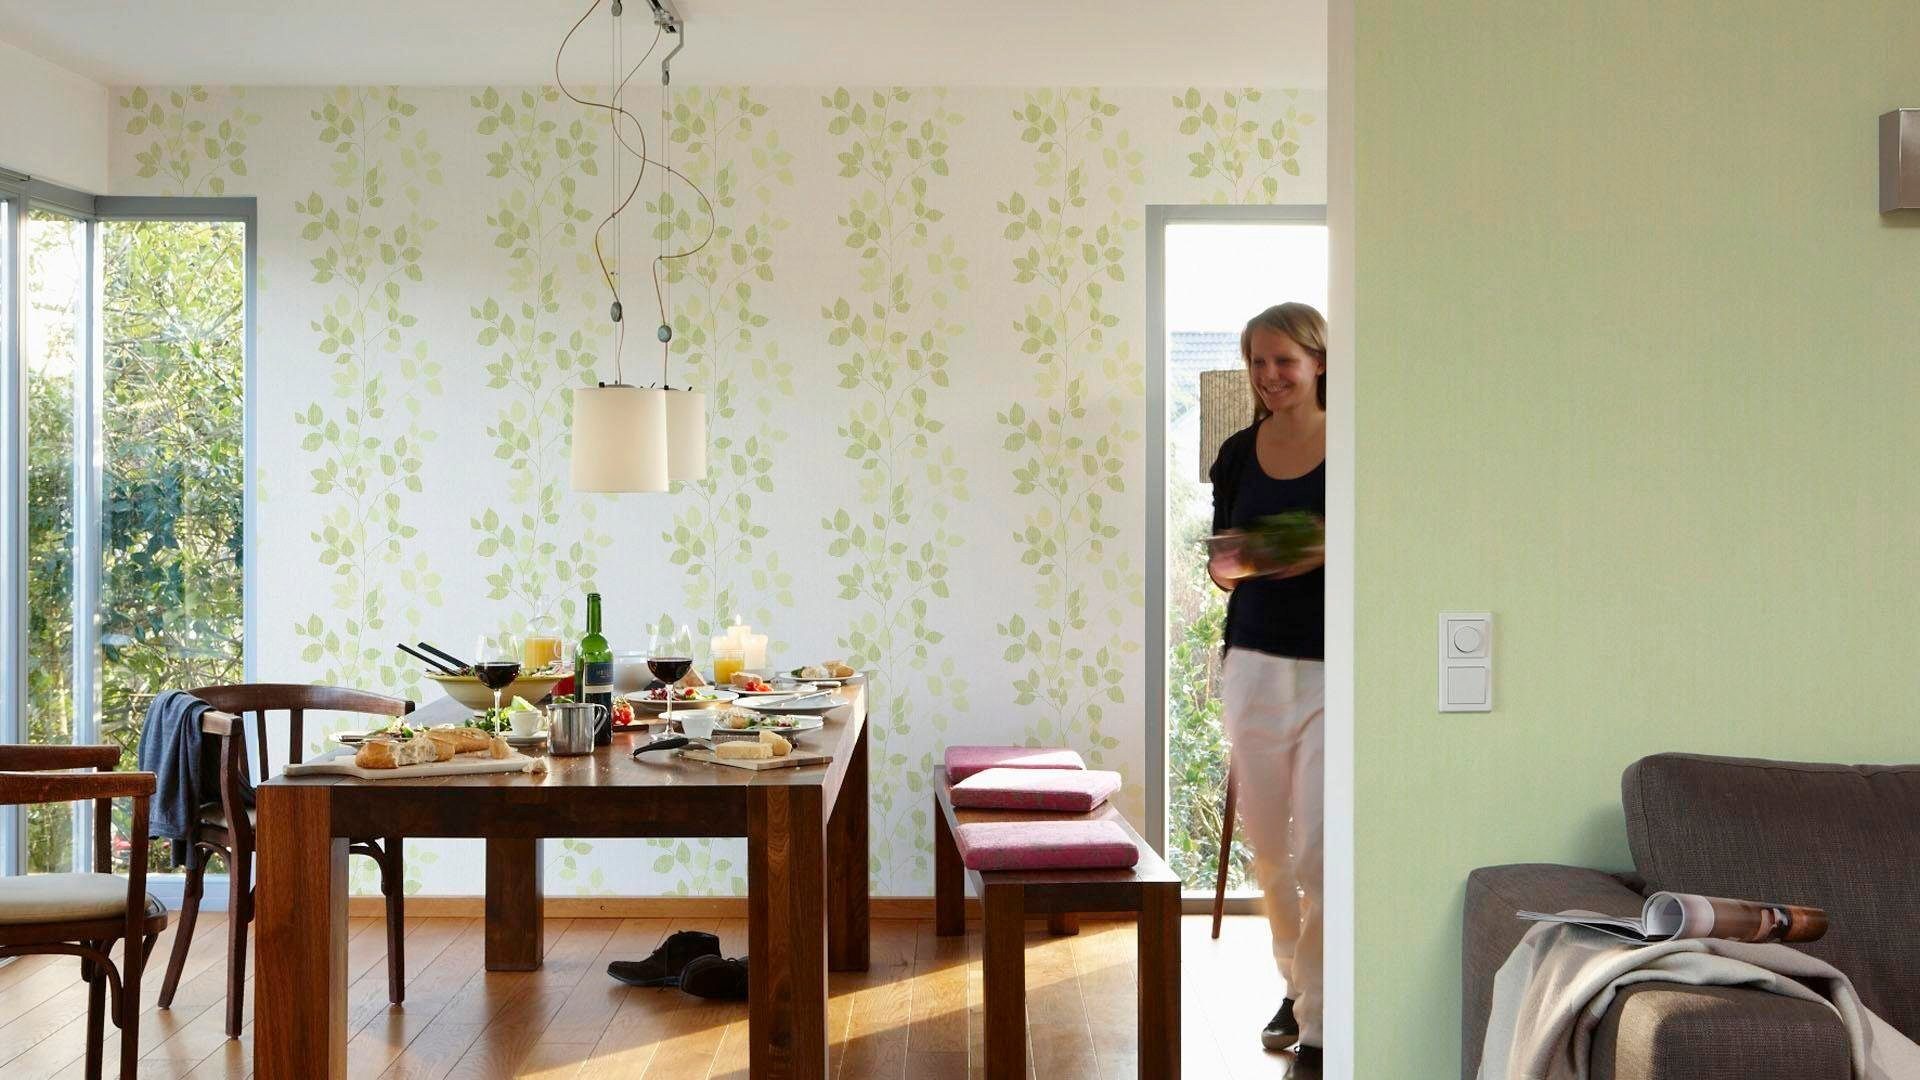 Vliestapete floral, Floral grün/weiß geblümt, Happy Spring, walls Moderne living Tapete